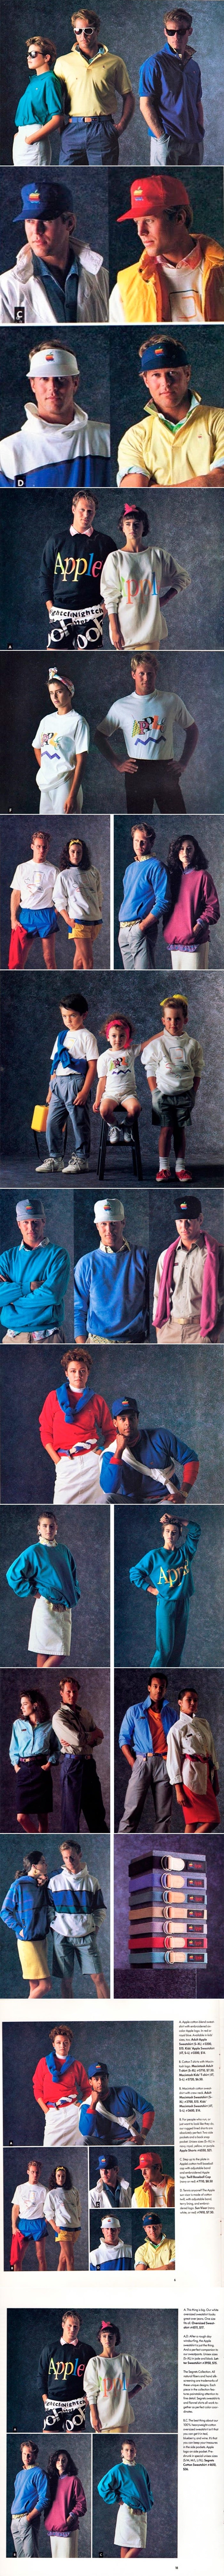 Ultraturbokul Apple moda opakih '80-ih